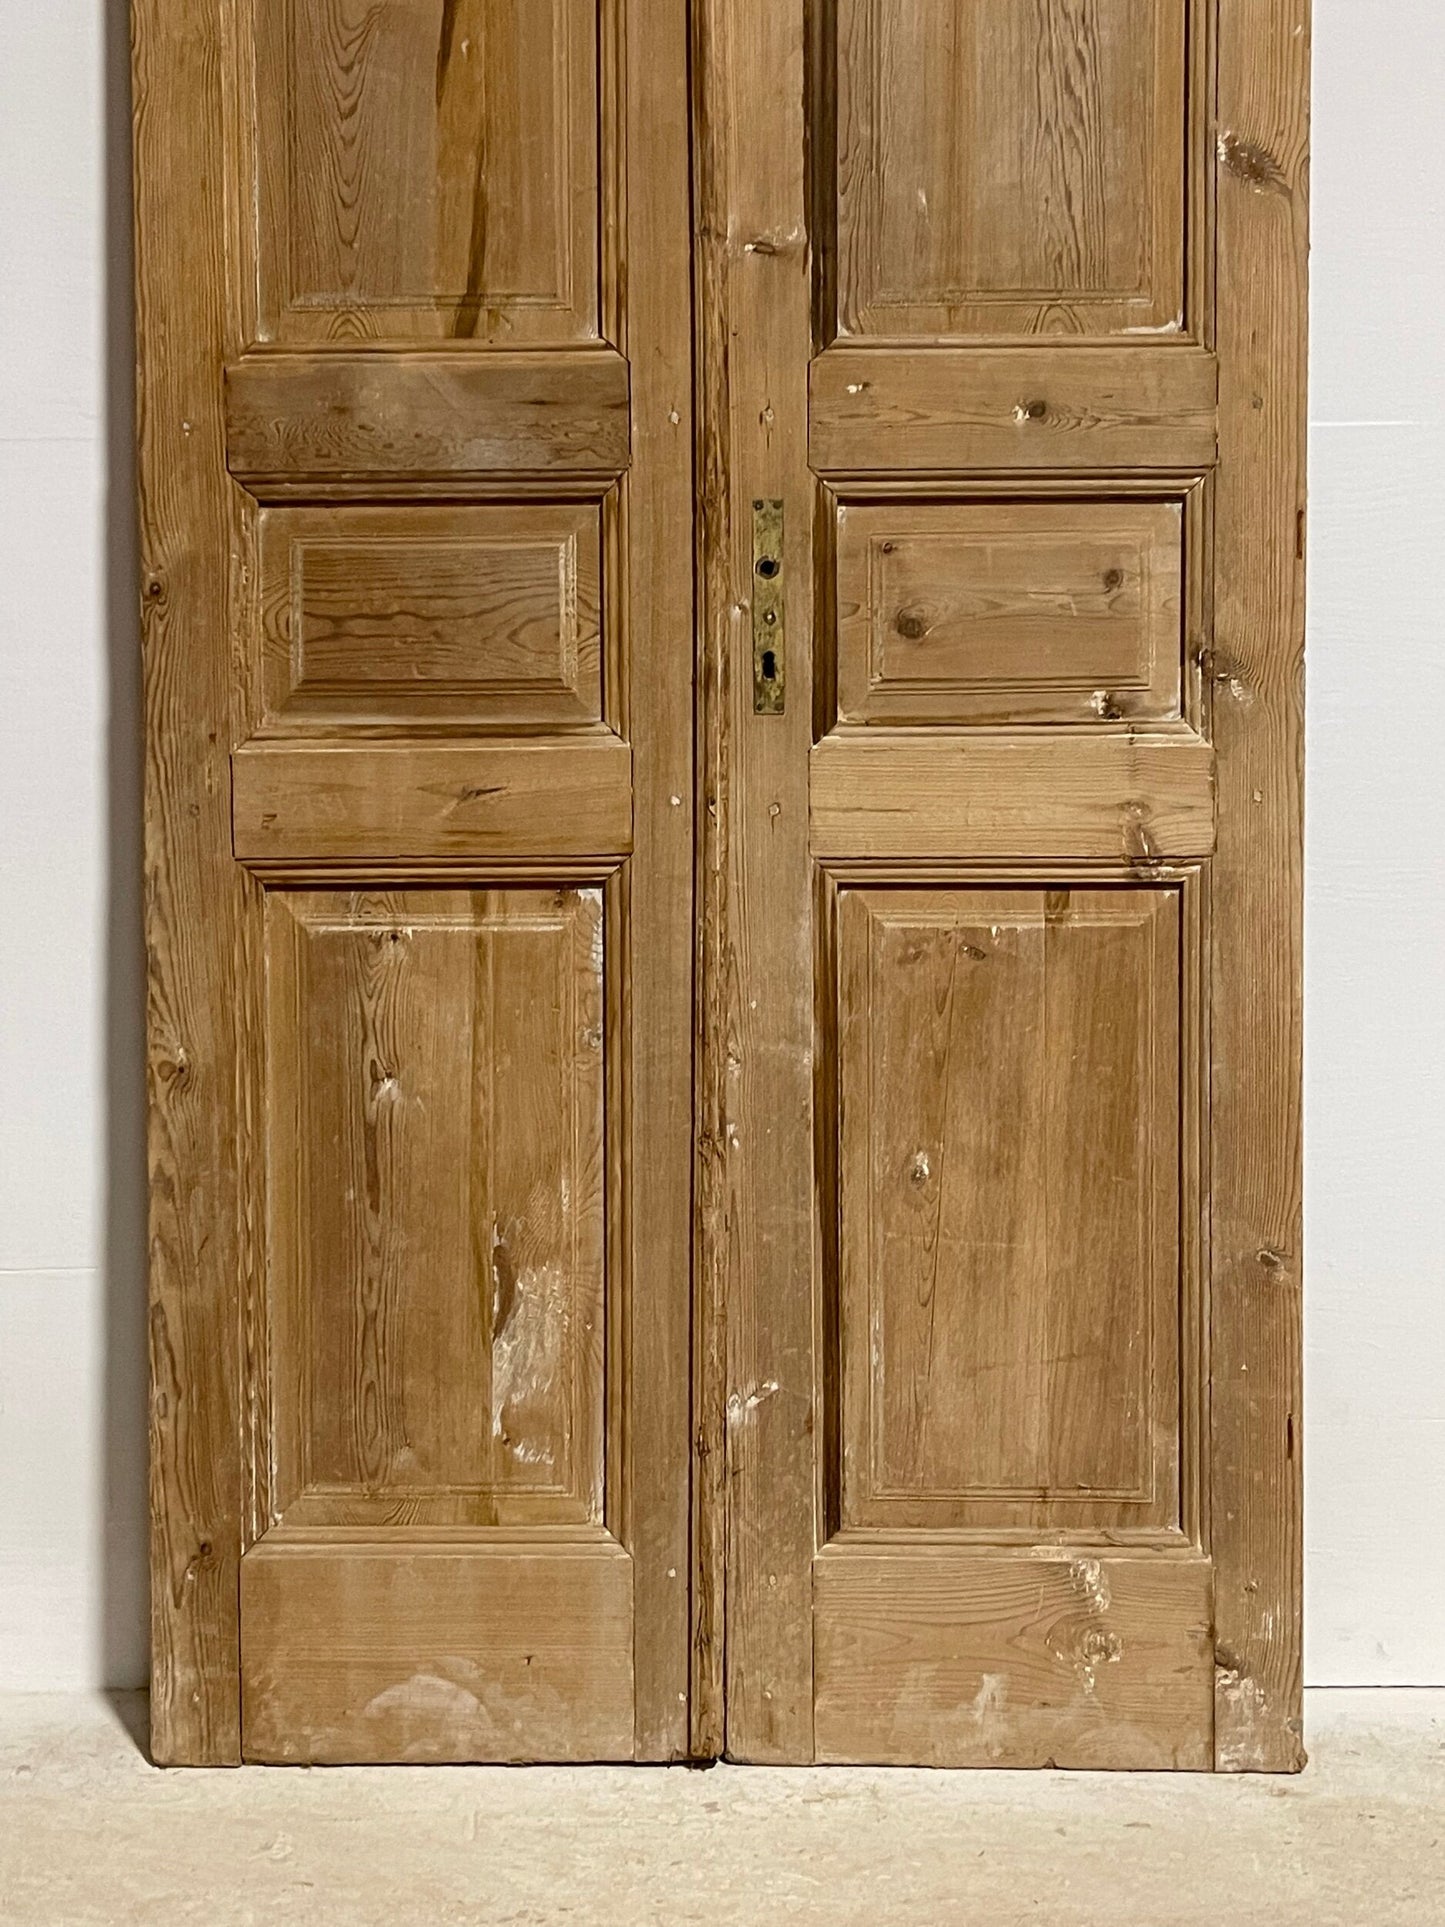 Antique French doors (93x41) H0074s